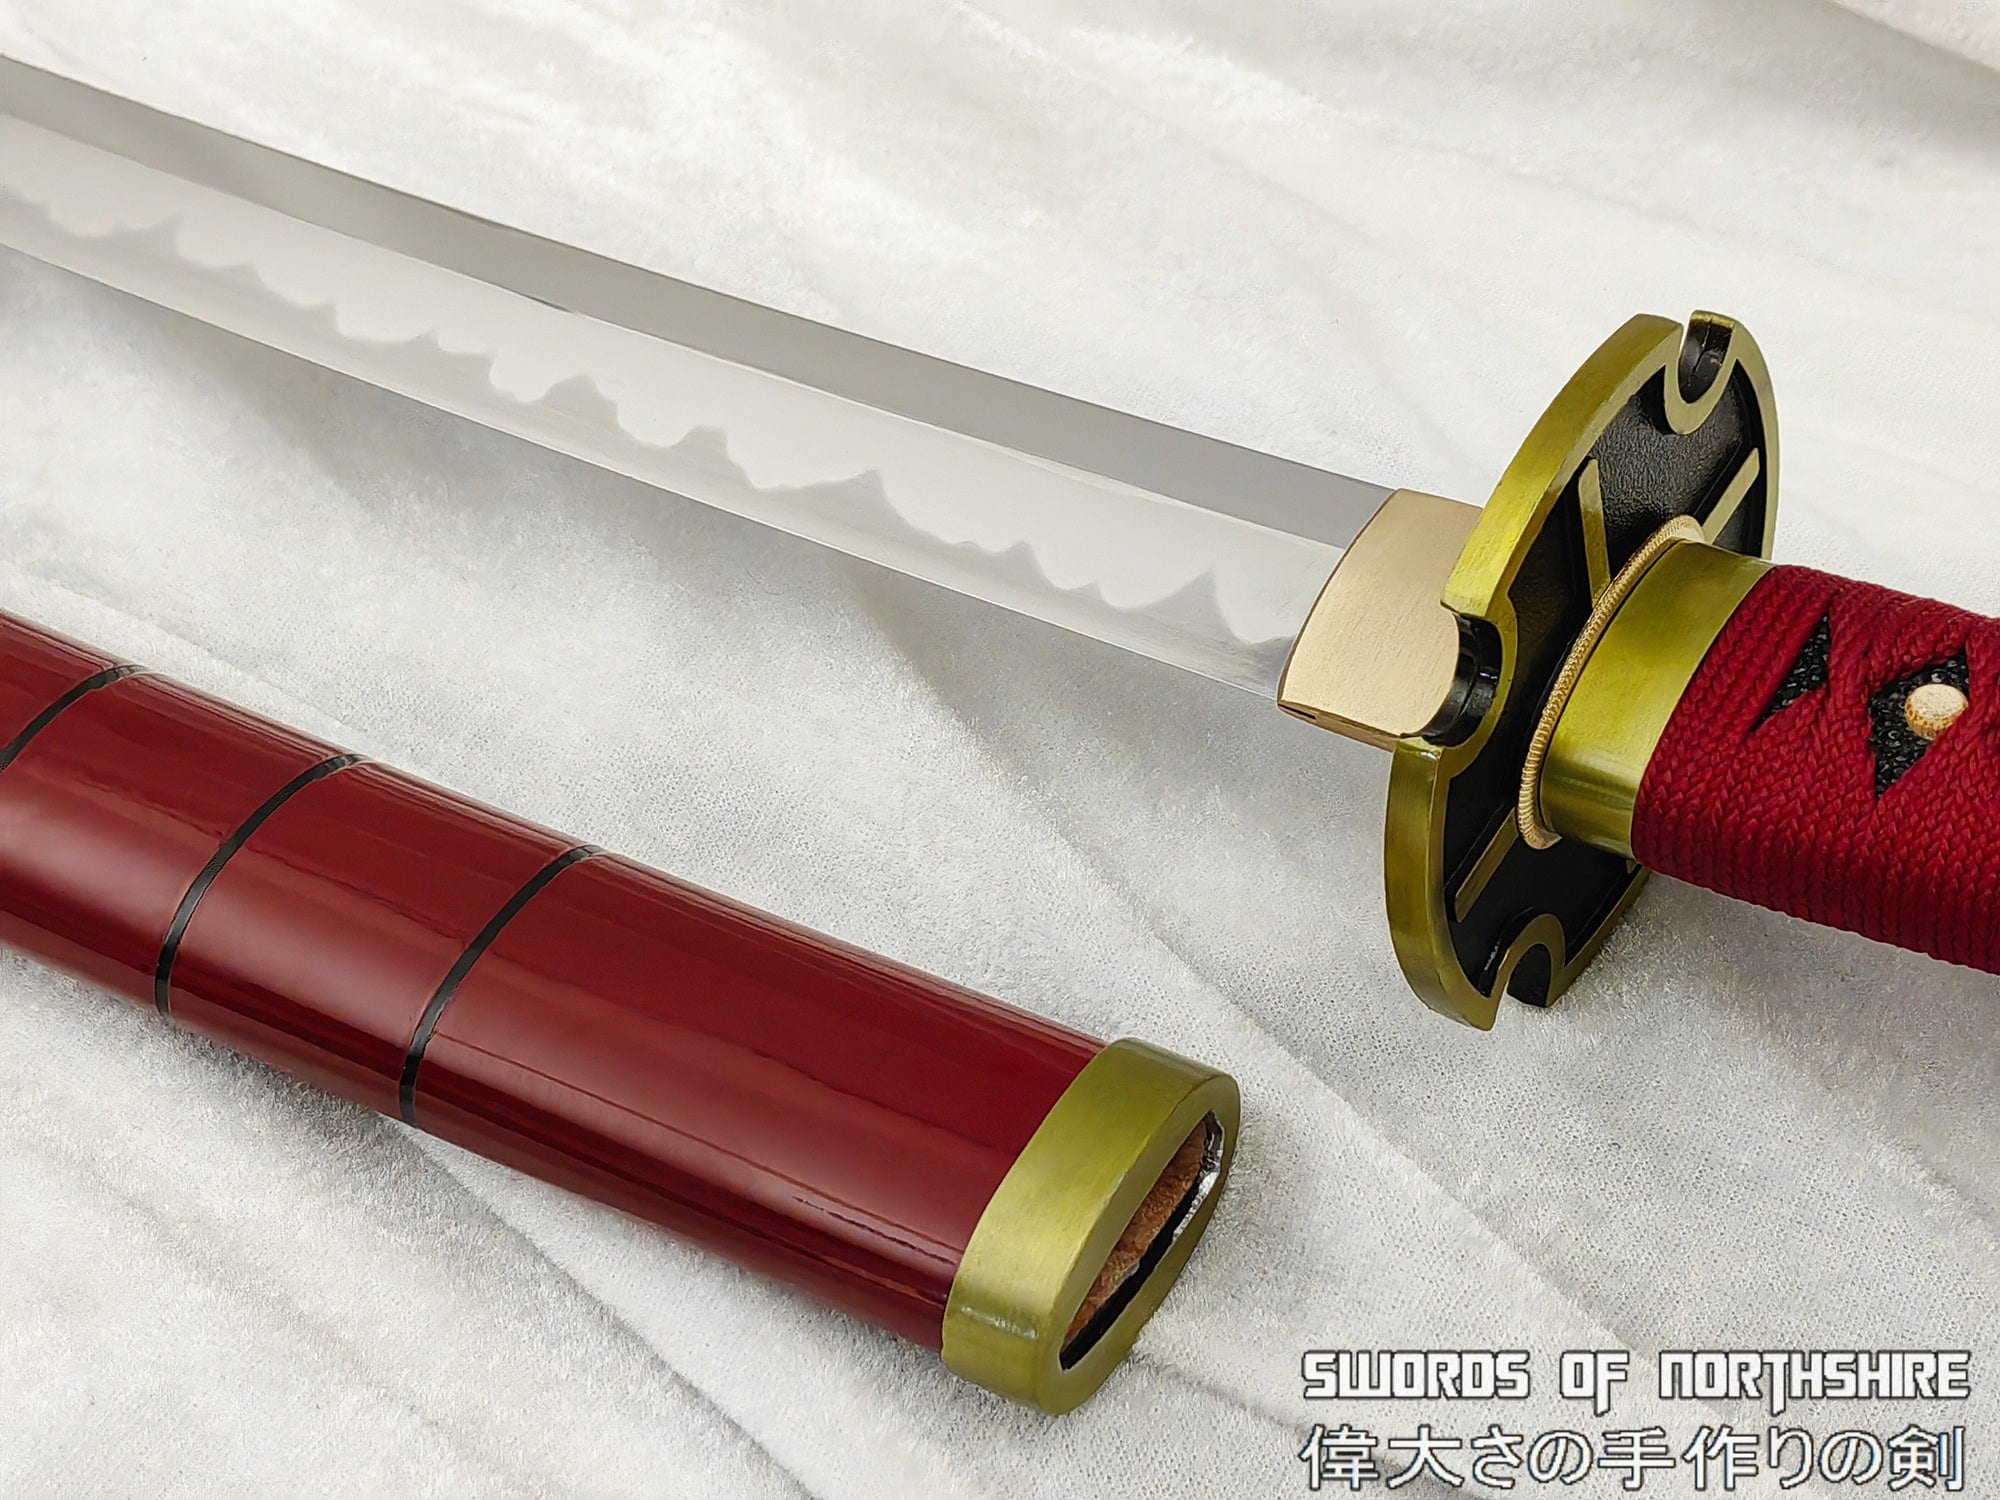 Zoro's Sandai Kitetsu Replica Sword | Carbon Steel Darkened Blade